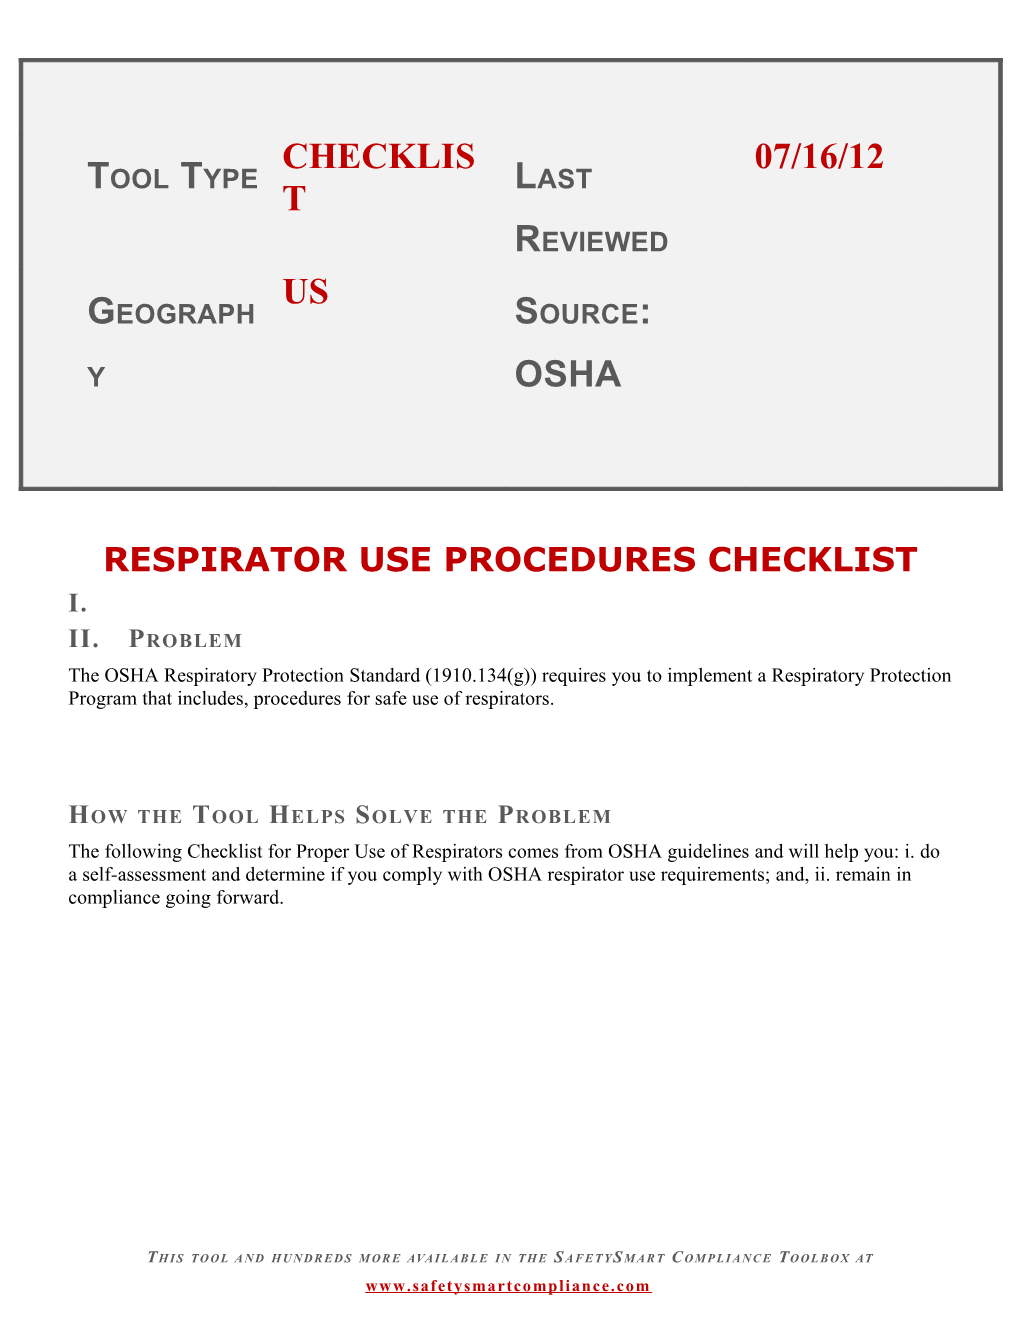 Respirator Use Procedures Checklist